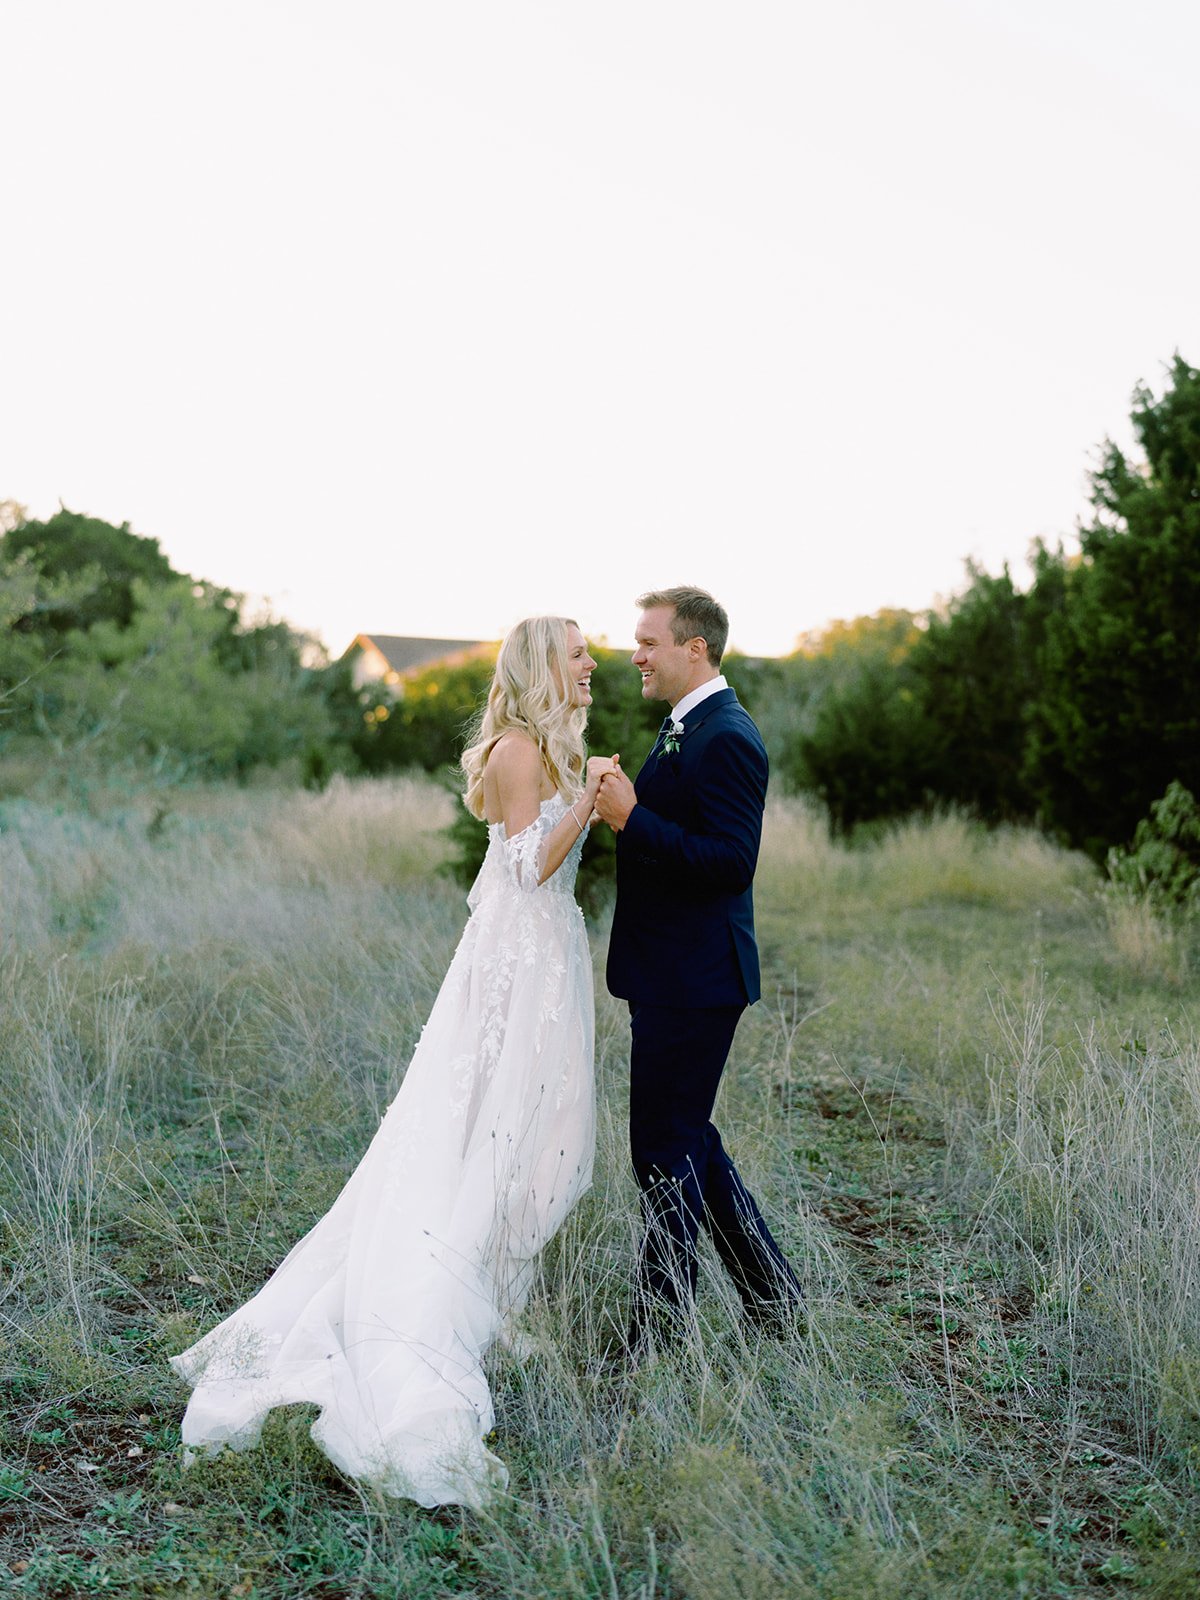 Best-Austin-Wedding-Photographers-Elopement-Film-35mm-Asheville-Santa-Barbara-Backyard-112.jpg